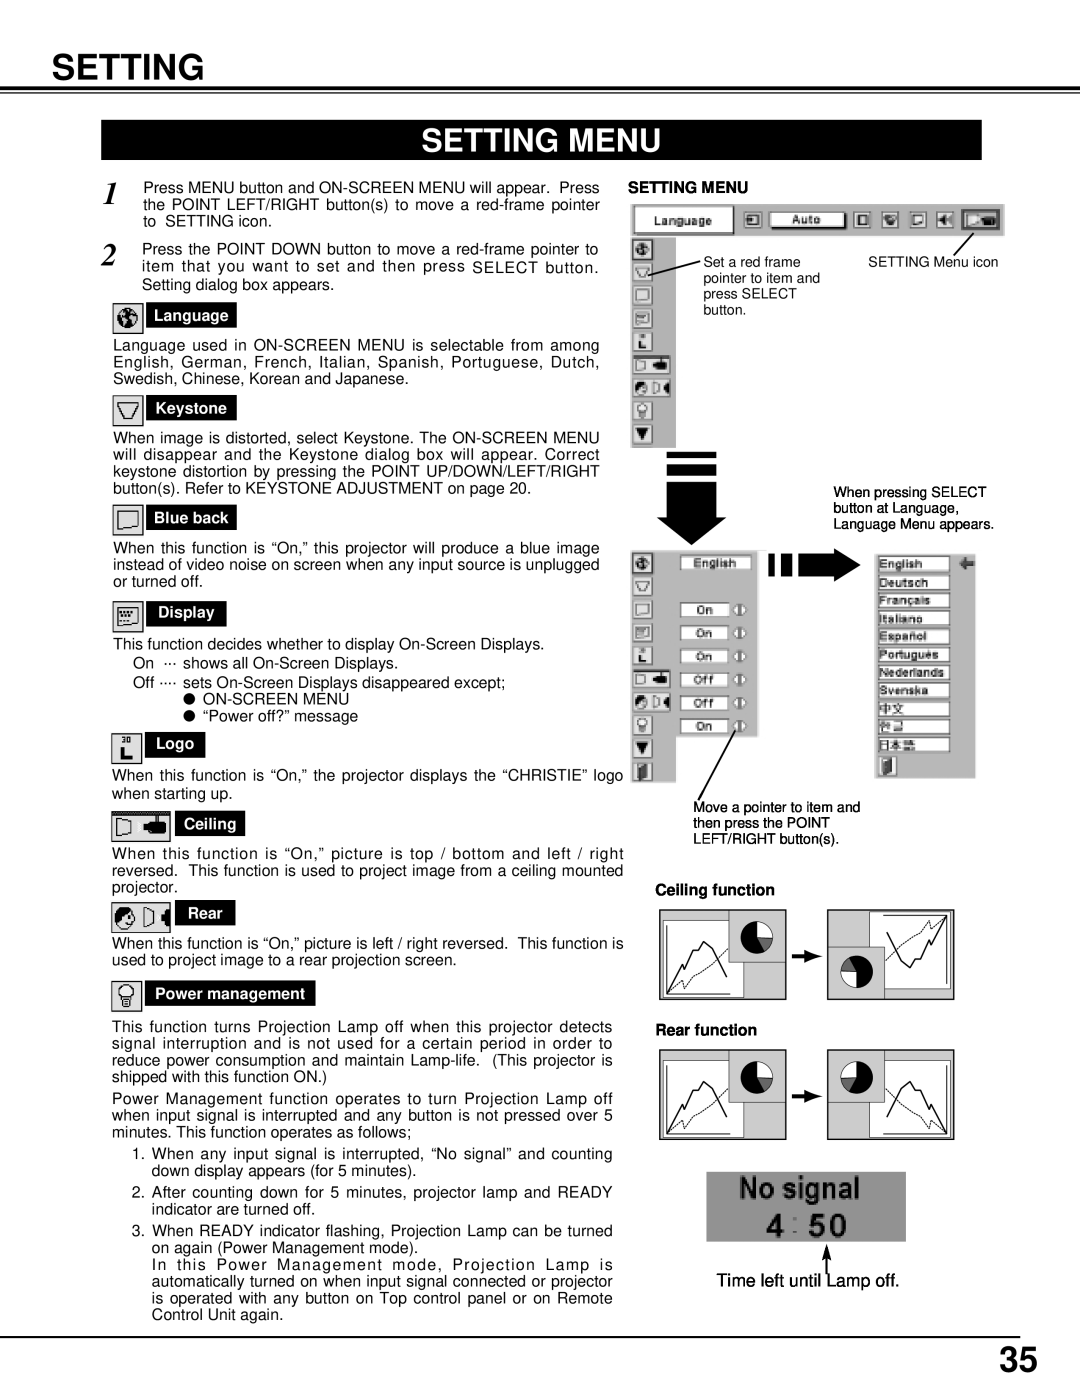 Christie Digital Systems 38-VIV205-01 user manual Setting Menu, Ceiling function, Rear function 